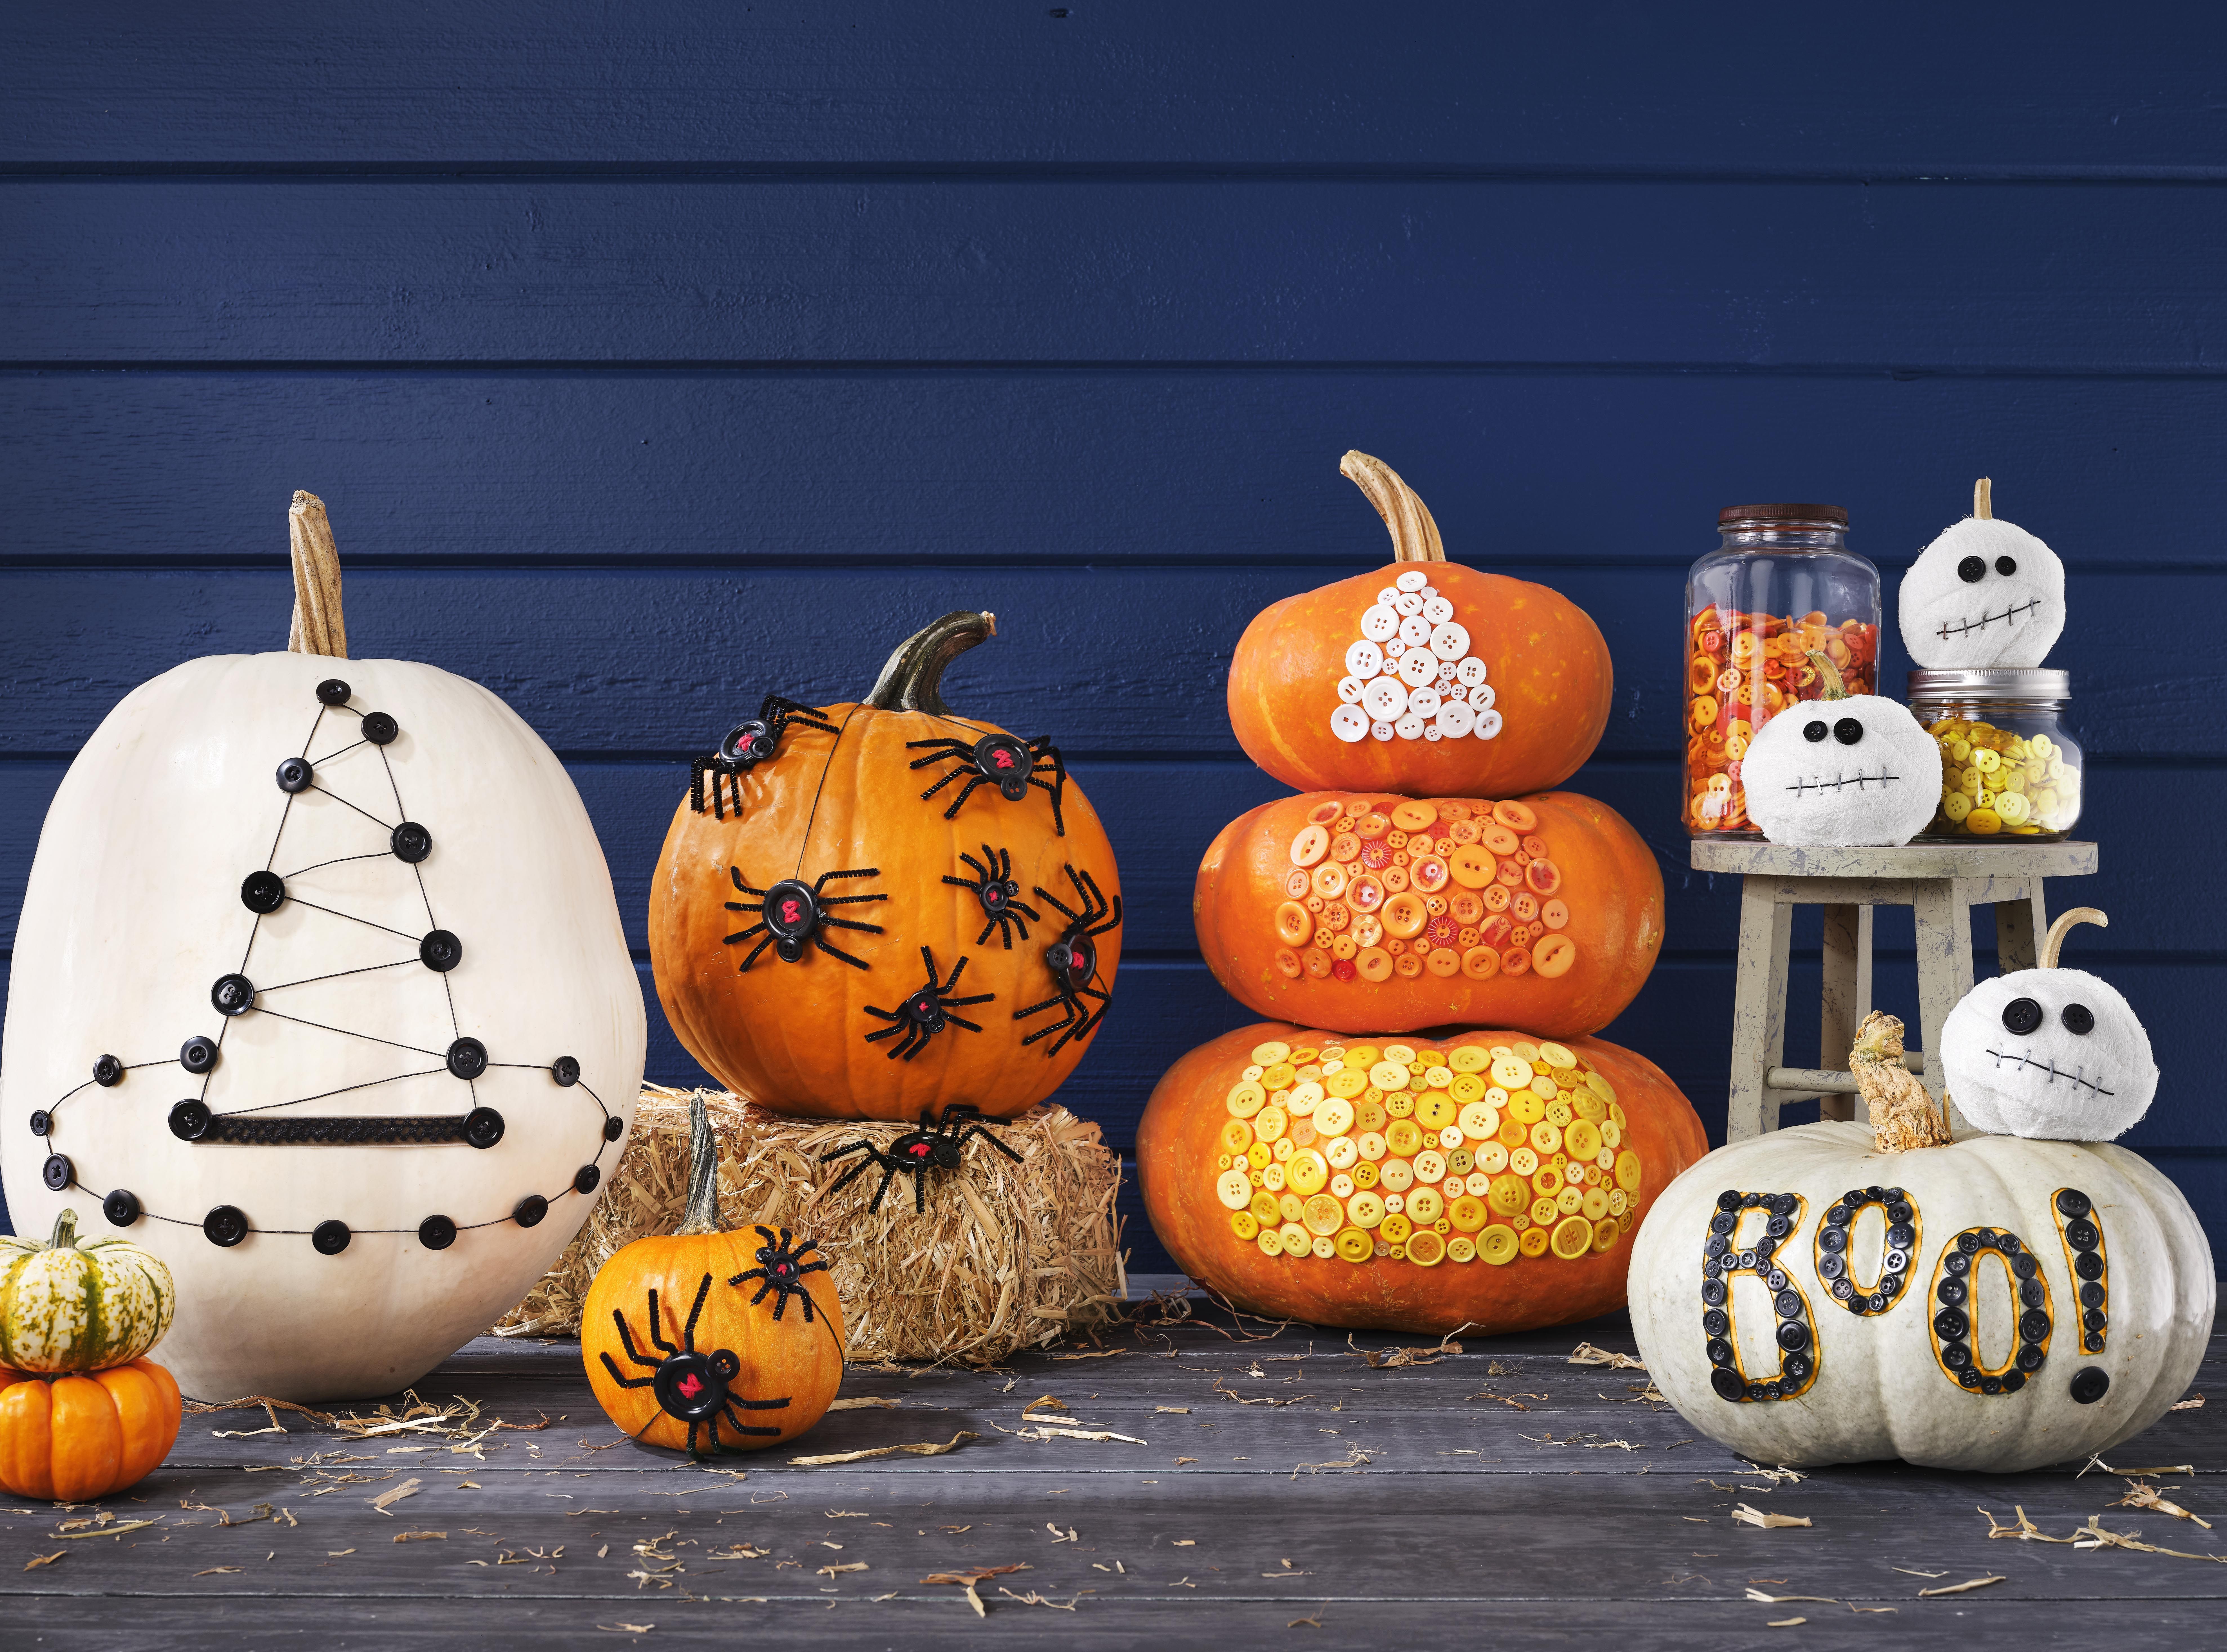 12+ Creative Pumpkin Decorating Ideas - Easy Halloween